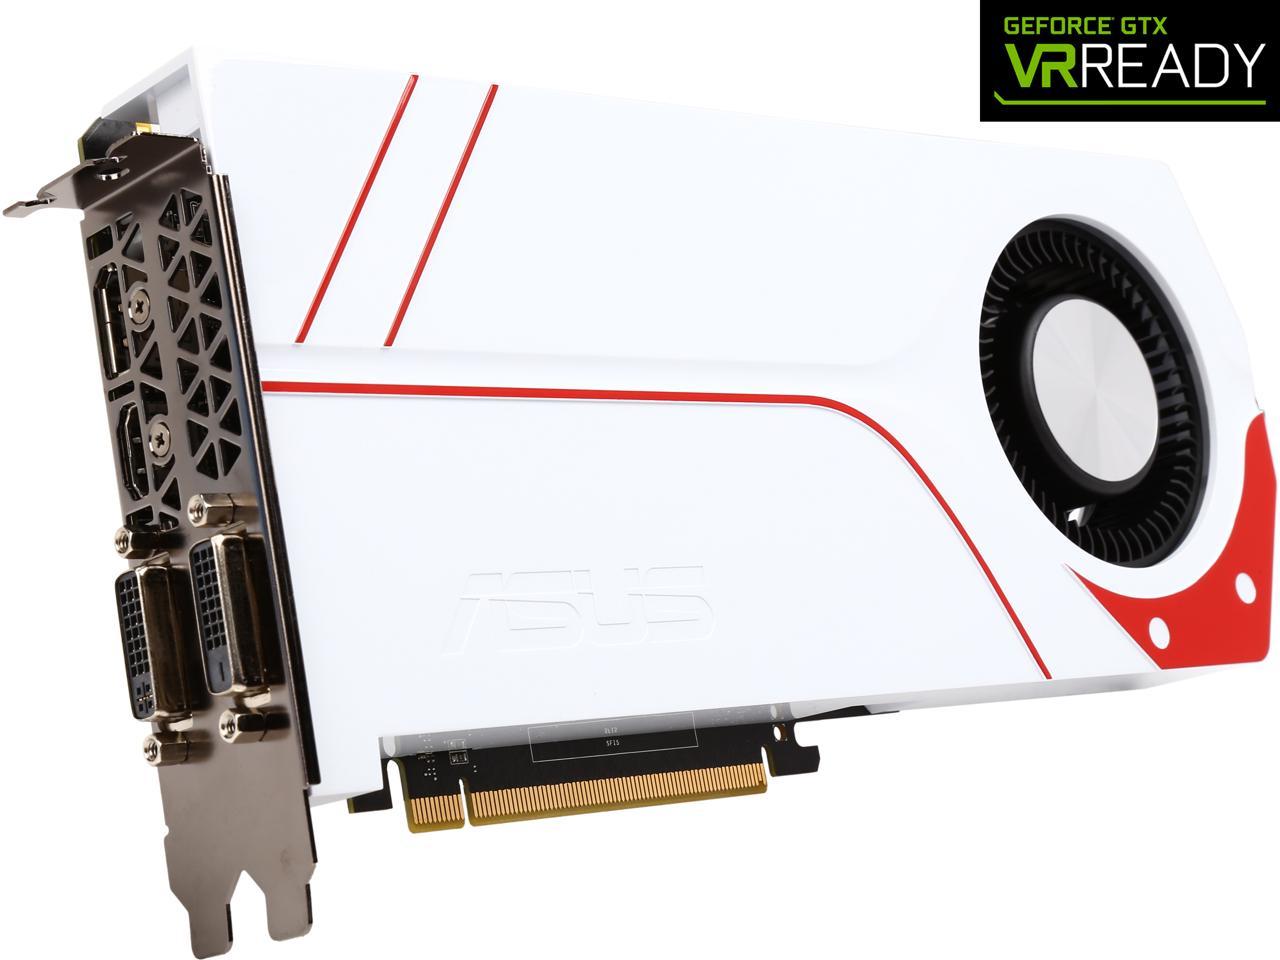 Asus Geforce Gtx 970 Turbo Gtx970 Oc 4gd5 Video Card Newegg Com